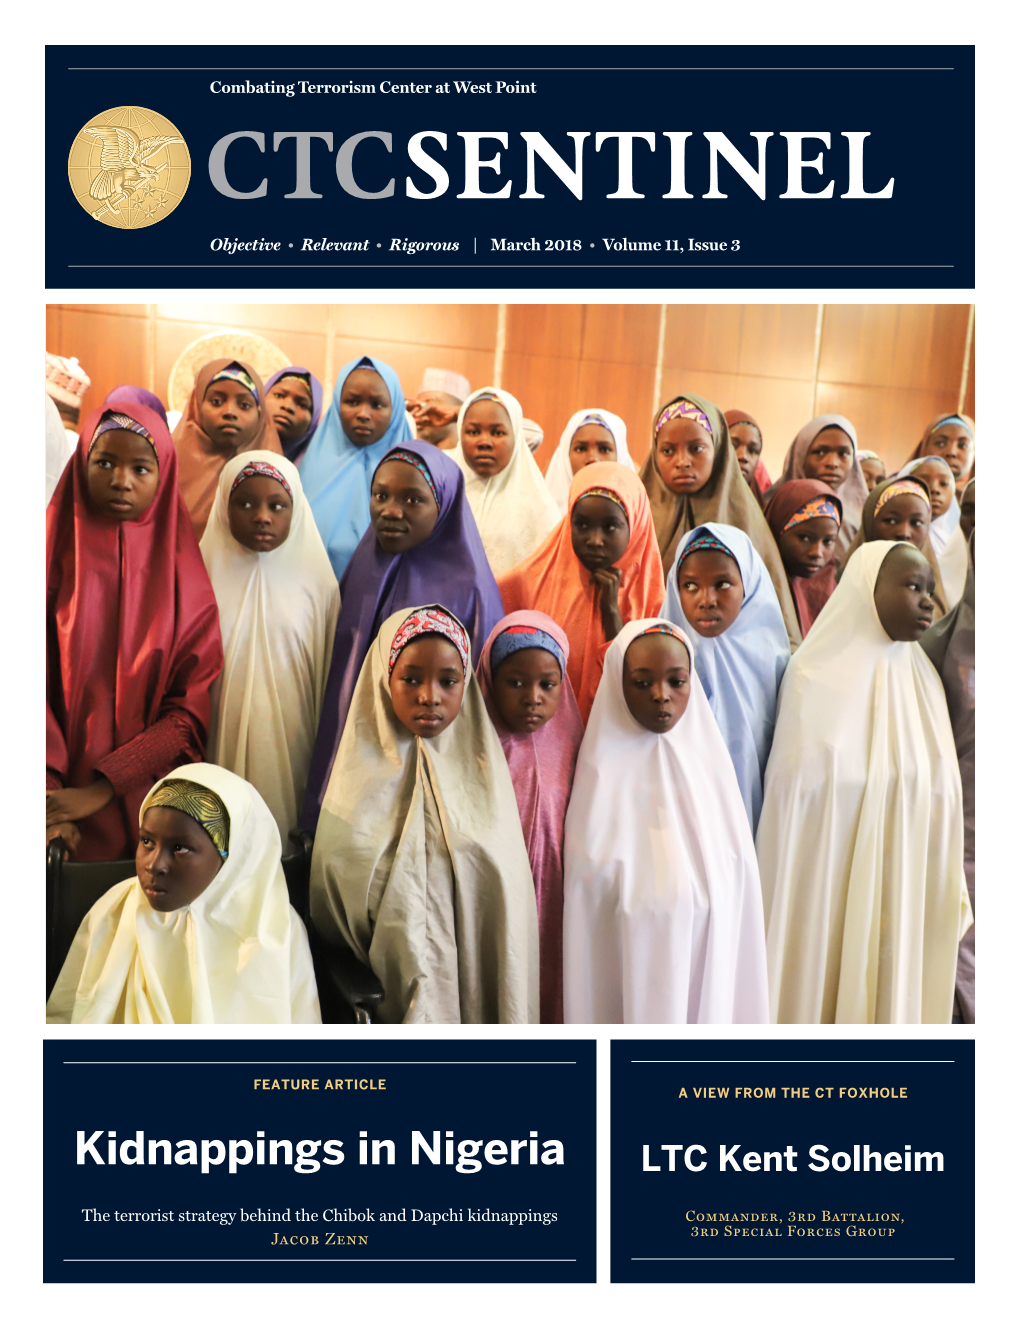 Kidnappings in Nigeria LTC Kent Solheim